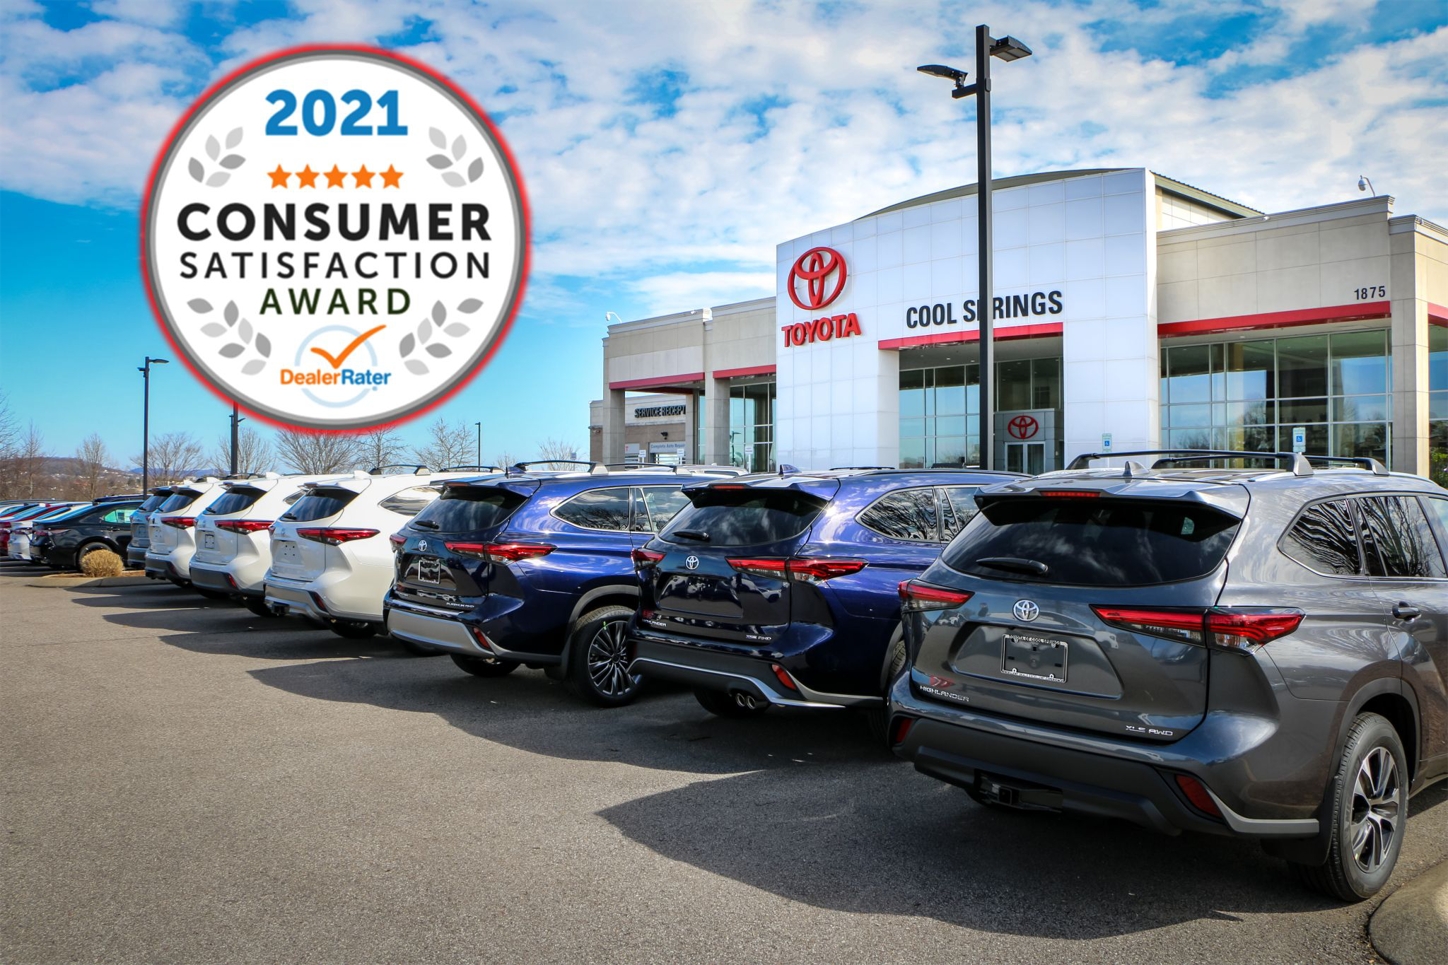 2021 Consumer Satisfaction Award